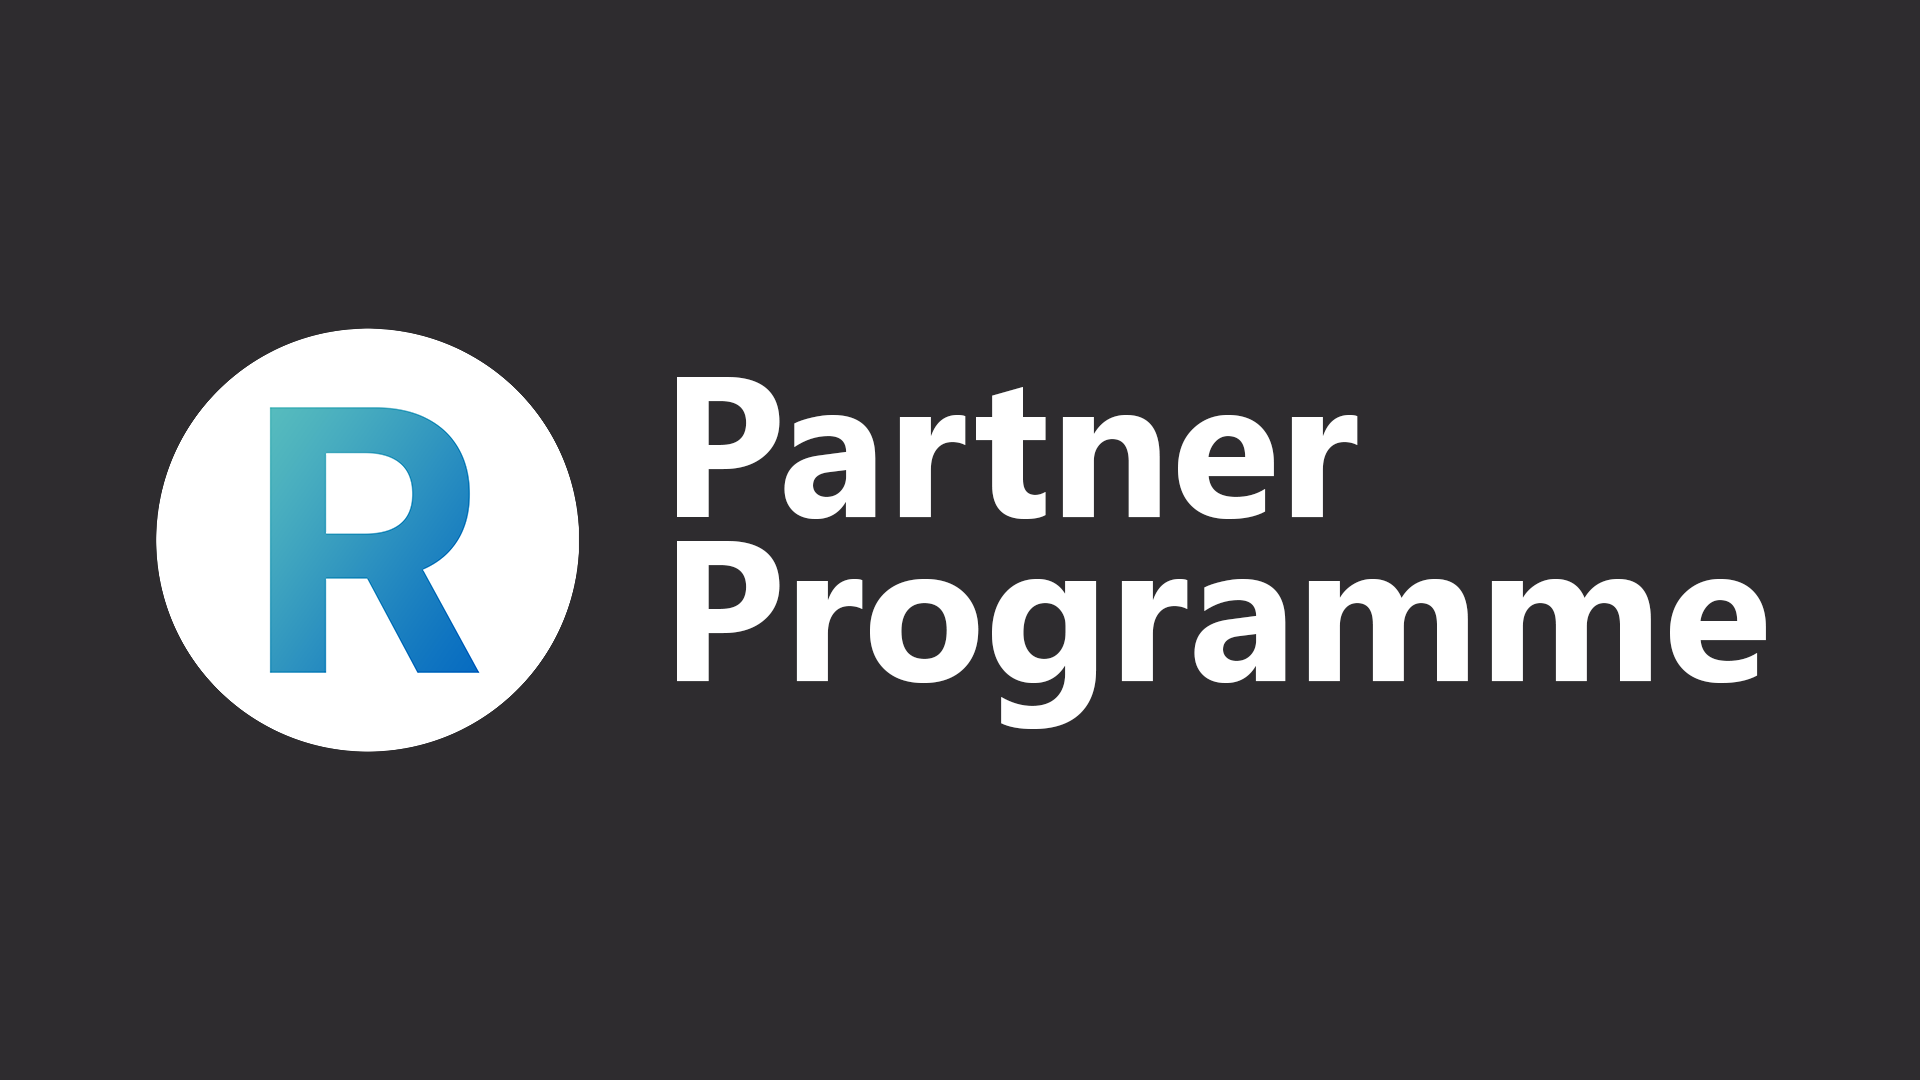 The Rellent Partner Programme